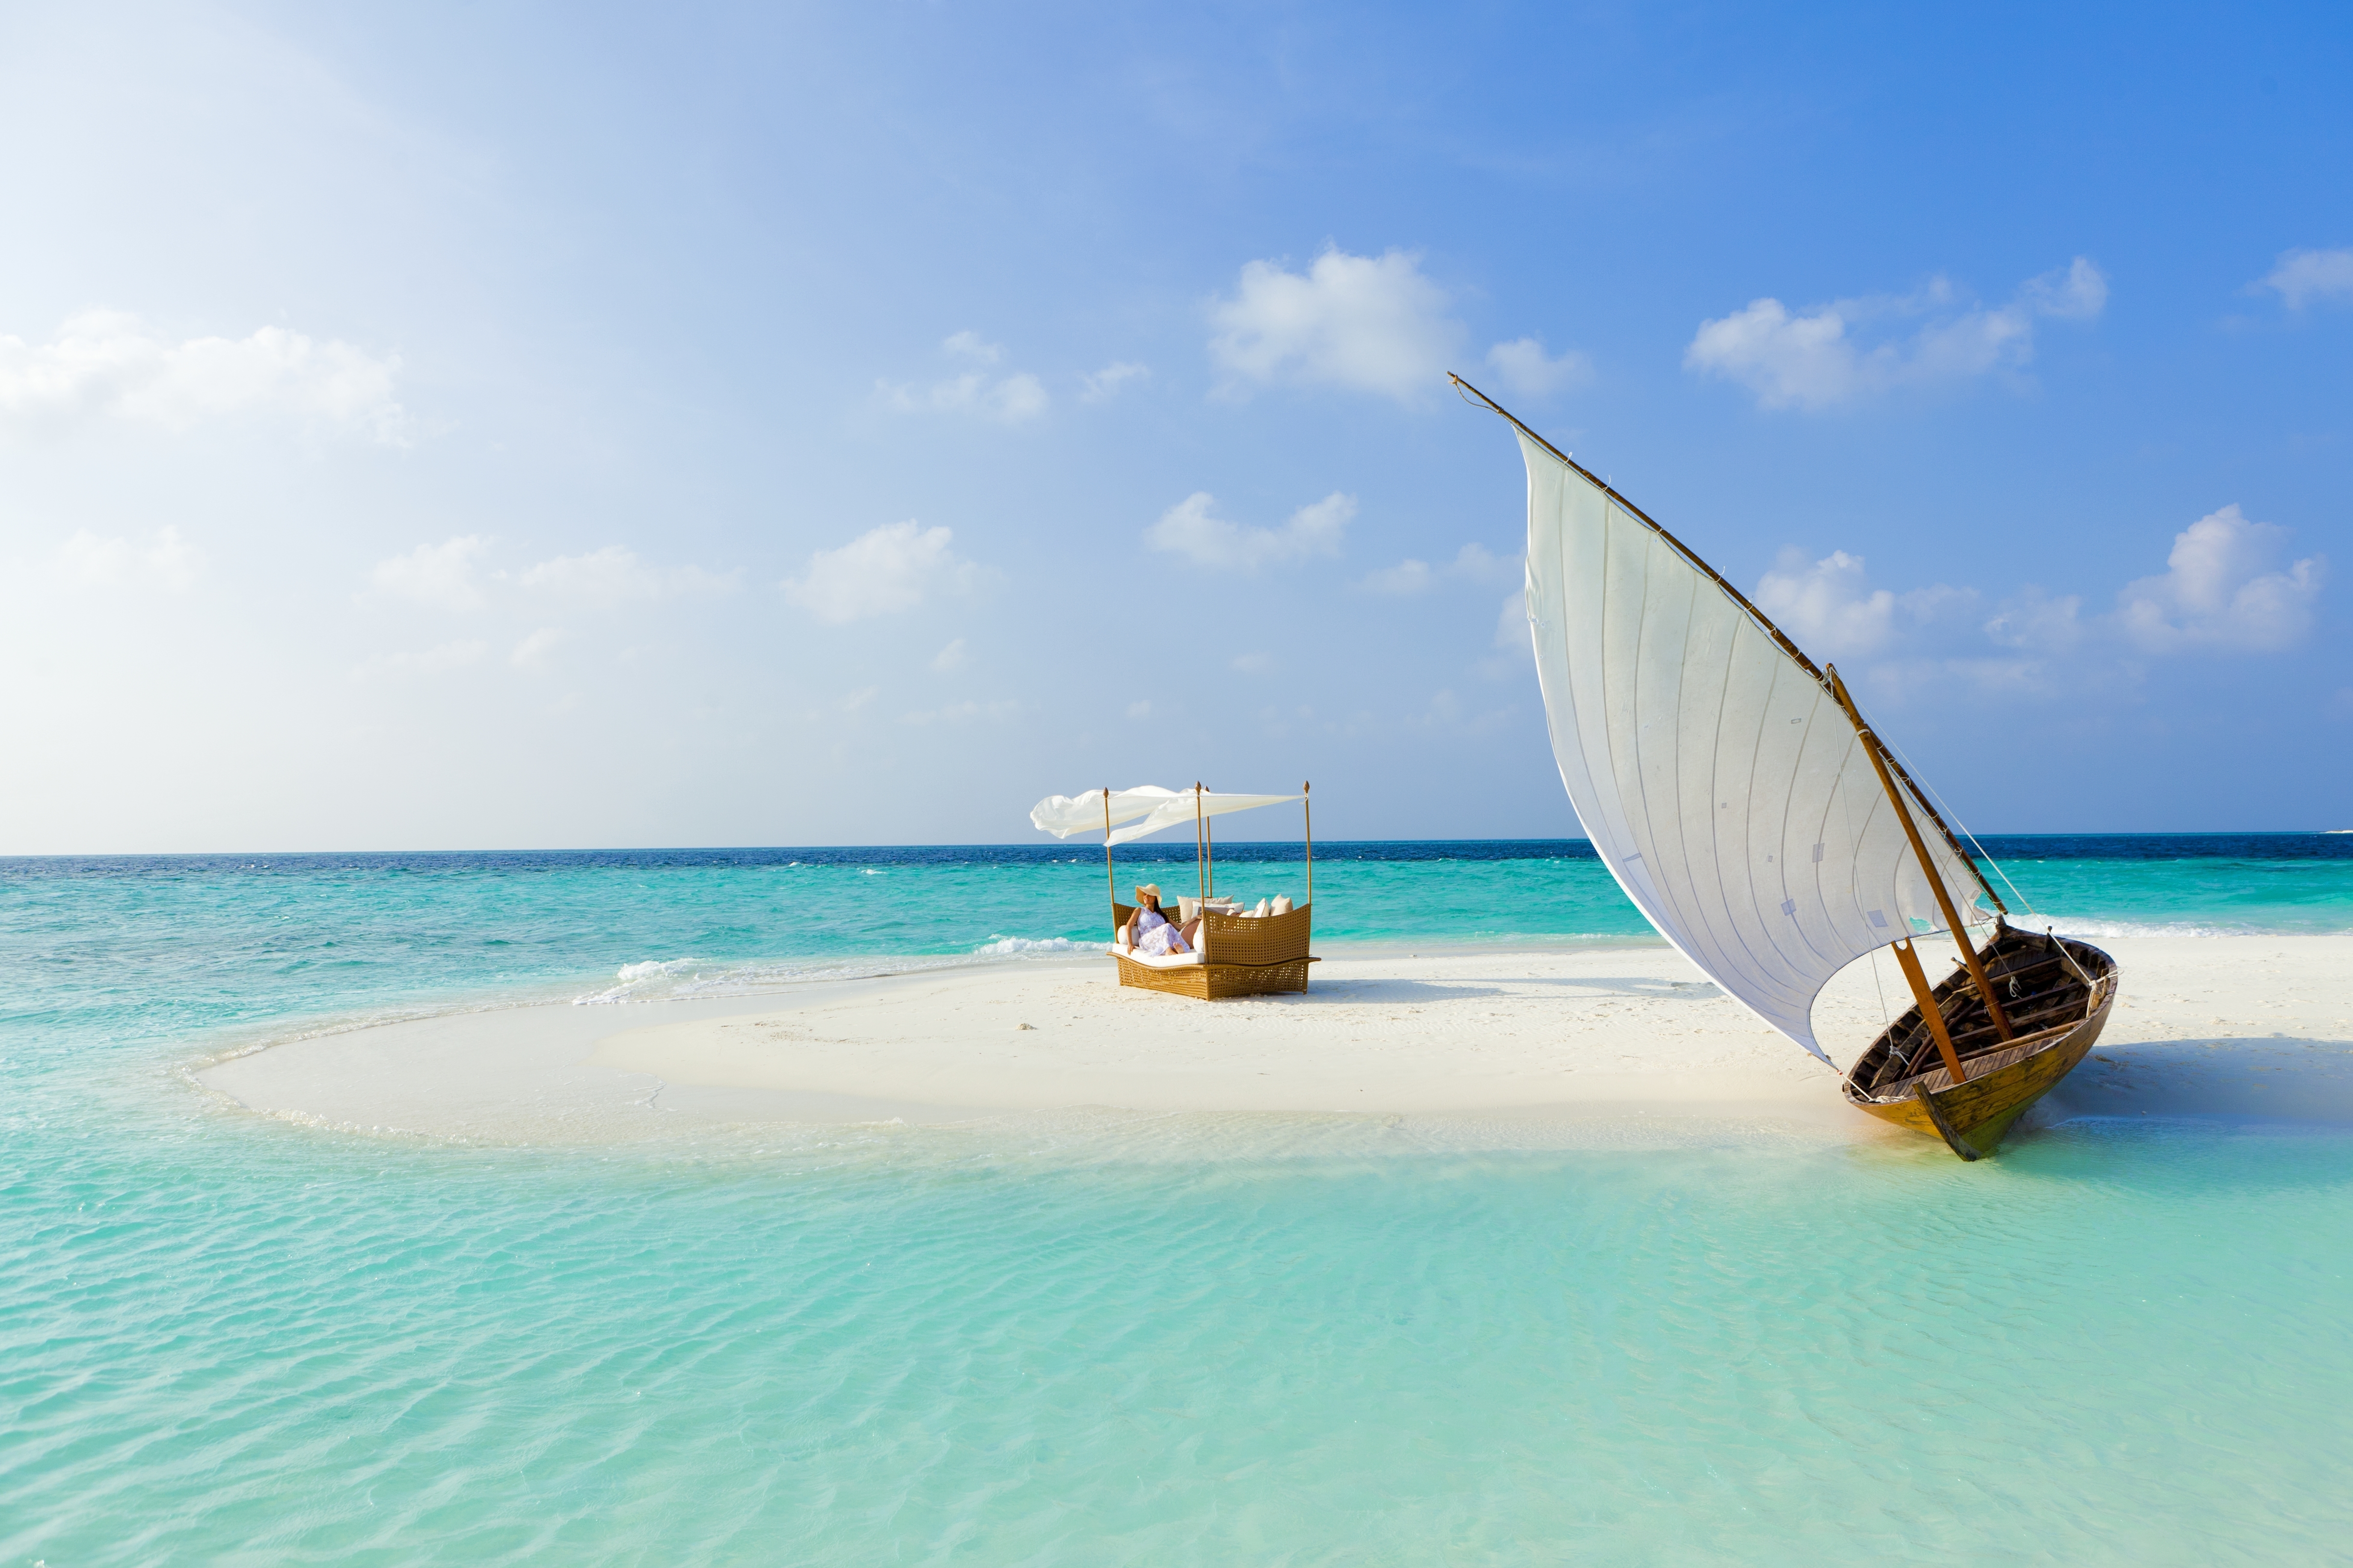 maldives, sea, sand, nature, beach, summer, boat, tropics, island